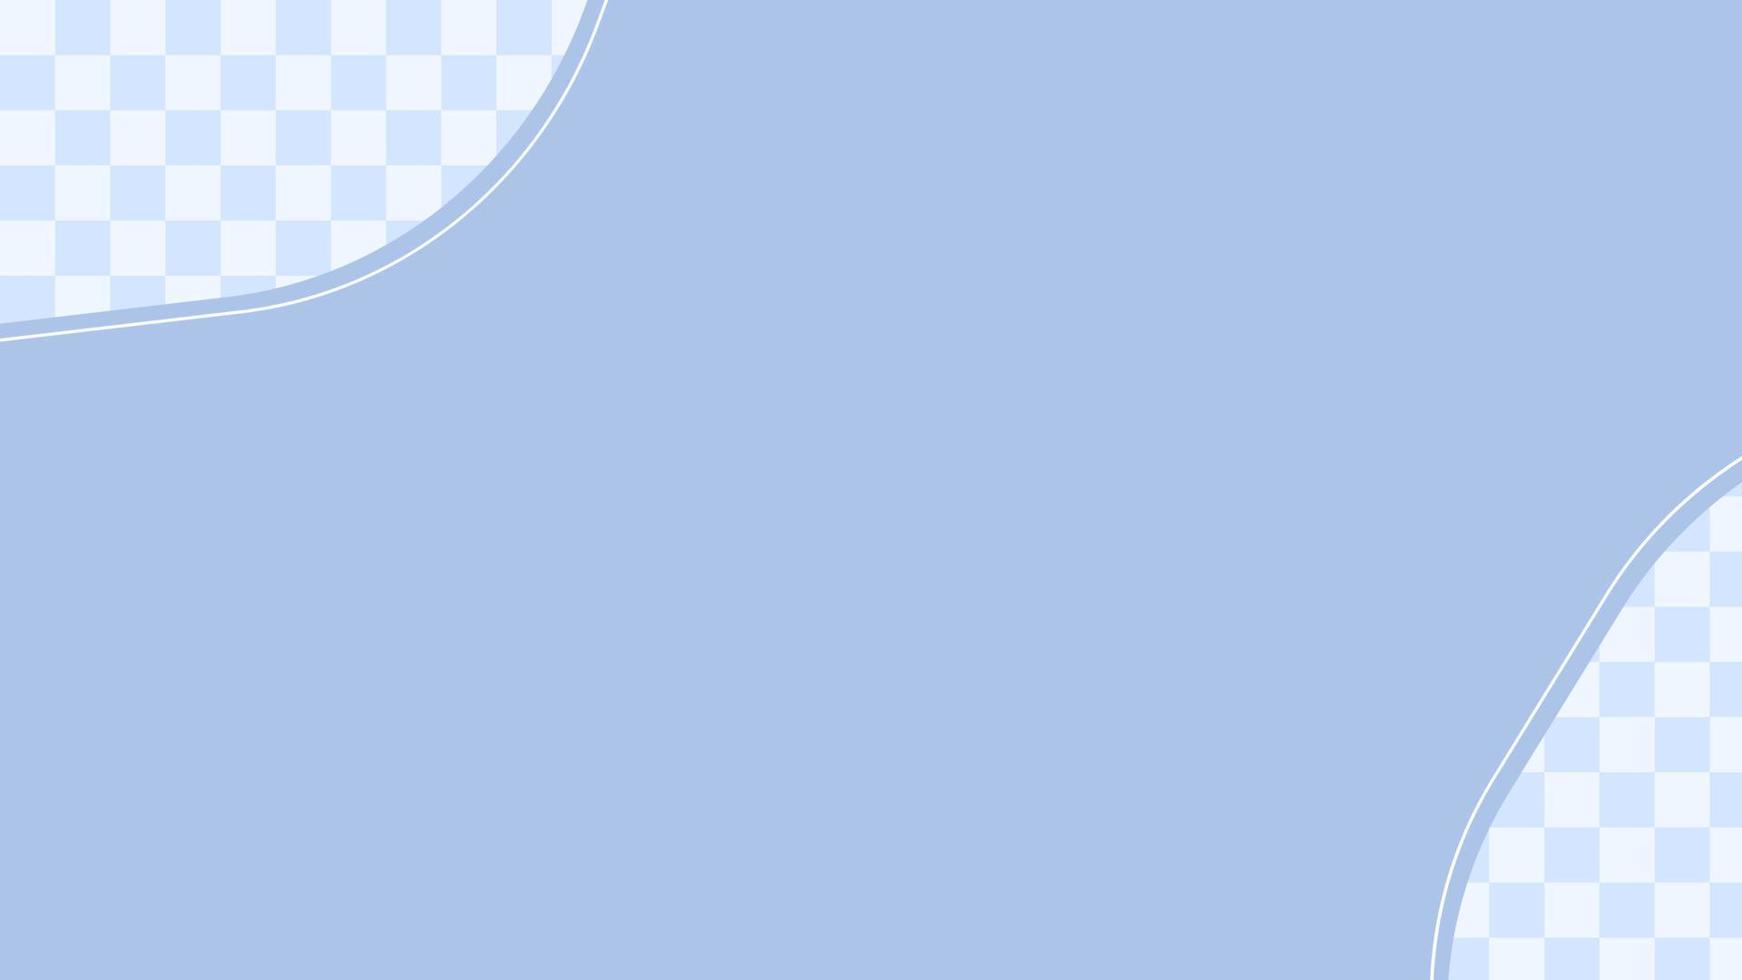 Ilustración de fondo abstracto de damas azul pastel lindo estético, perfecto para papel tapiz, telón de fondo, postal, fondo y pancarta vector